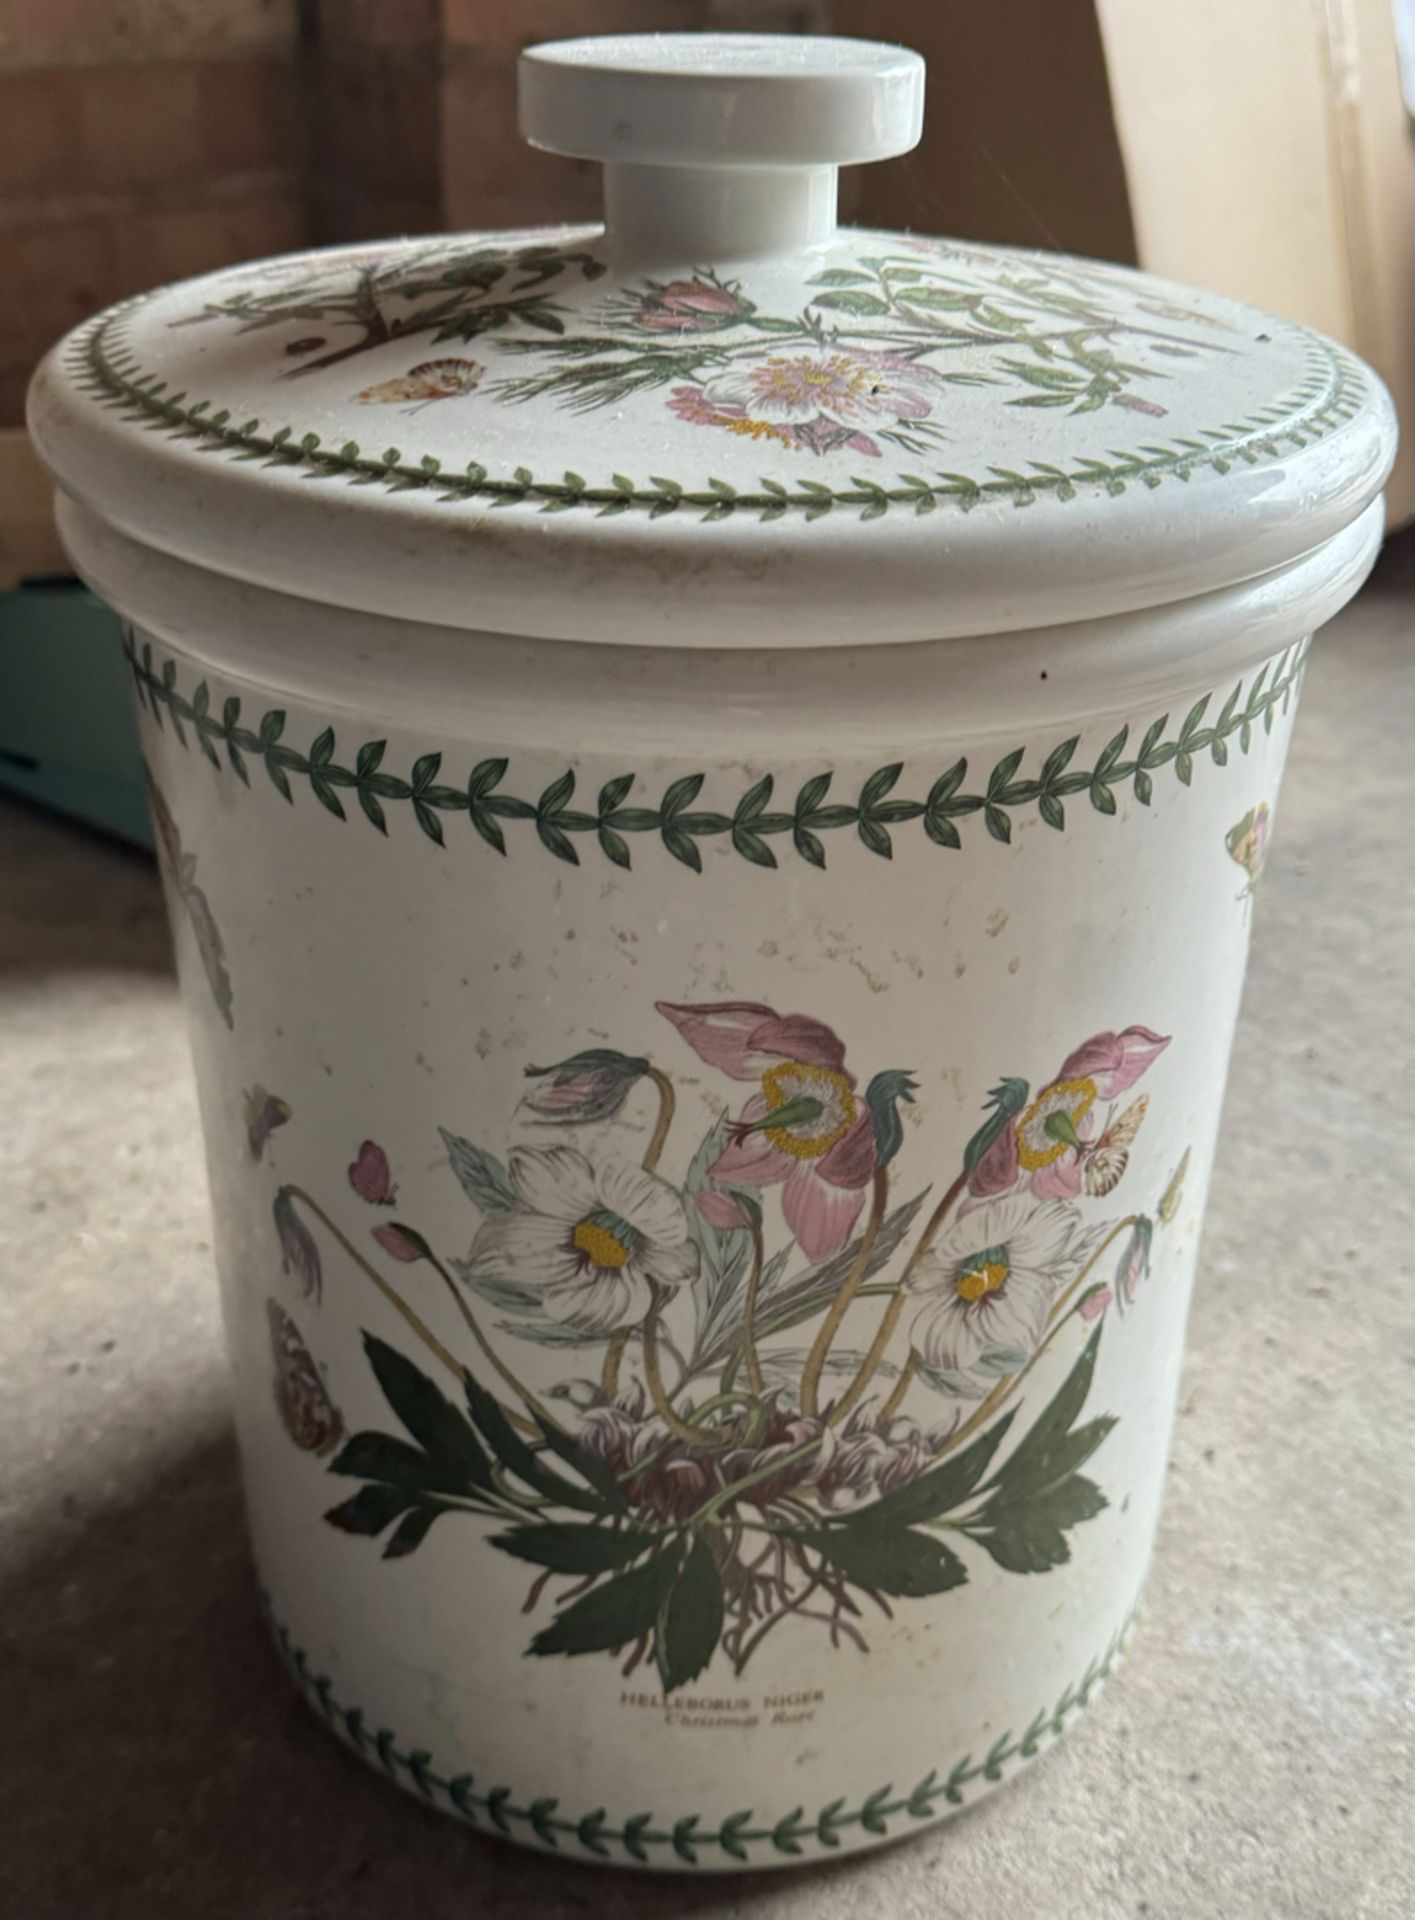 20th Century Ceramics: Portmeirion "Botanic Garden" Wild Rose Bread Bin